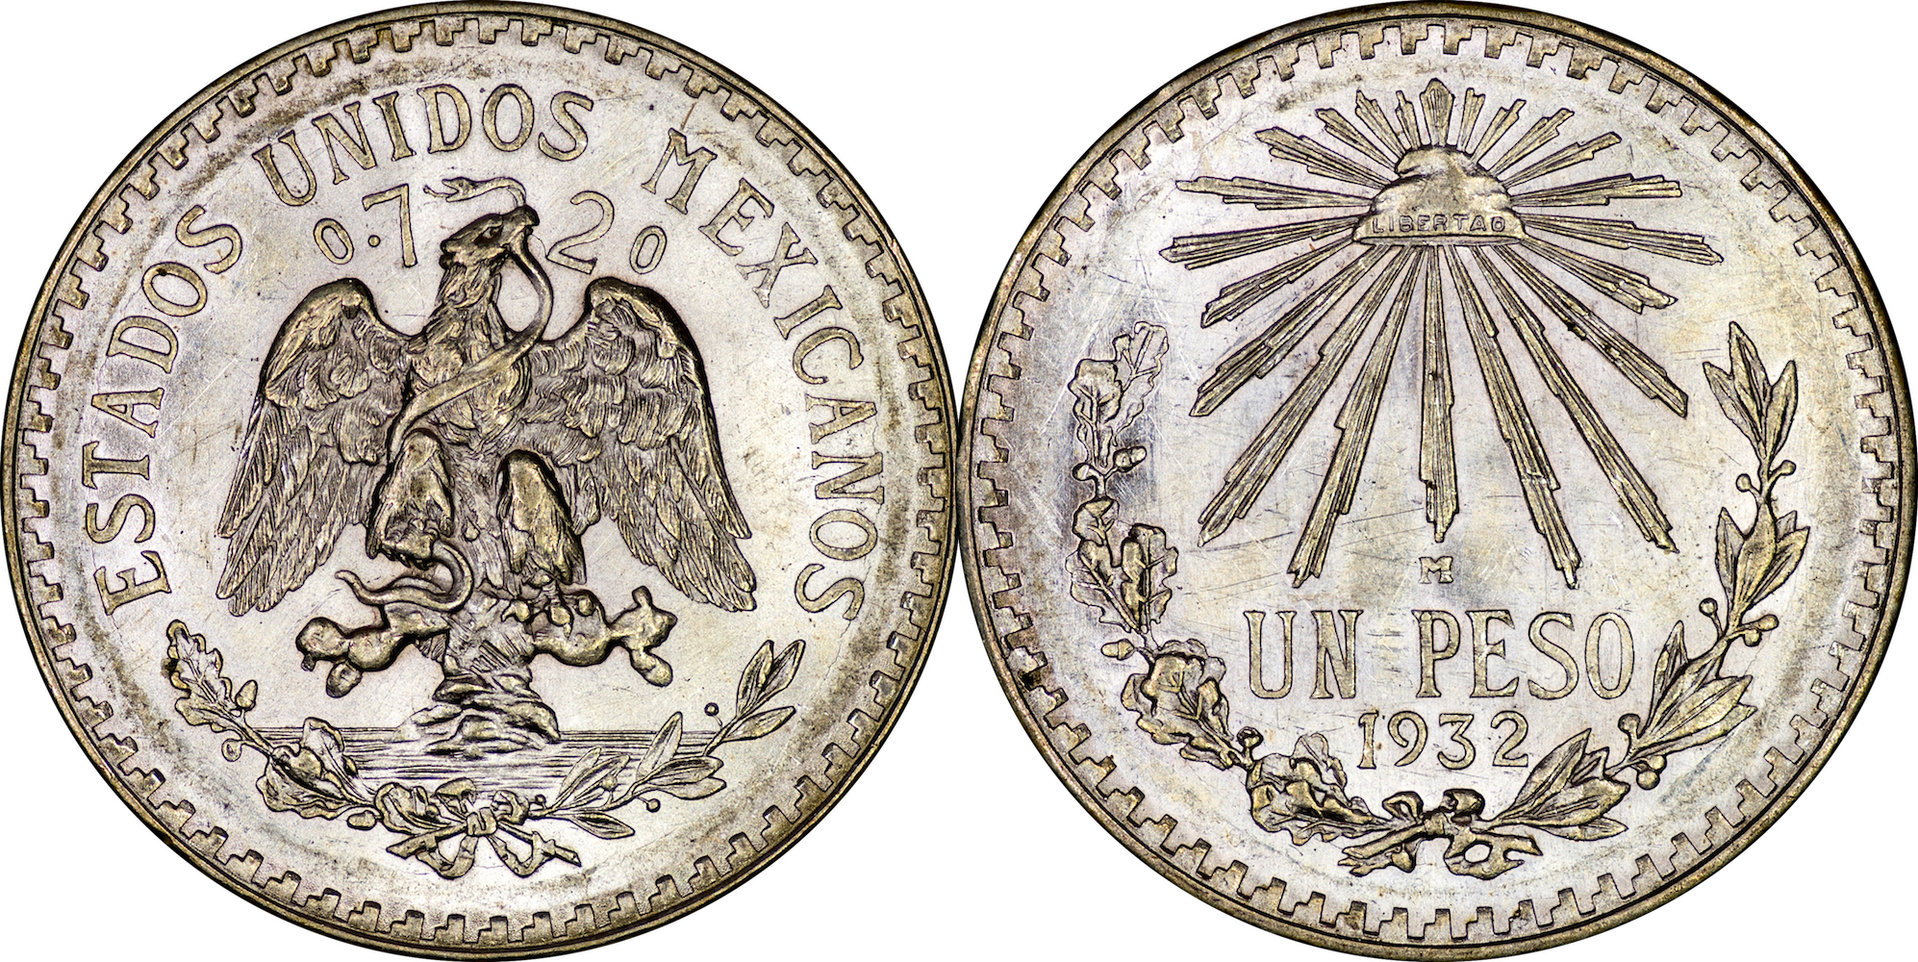 Mexico - 1932 1 Peso.jpg